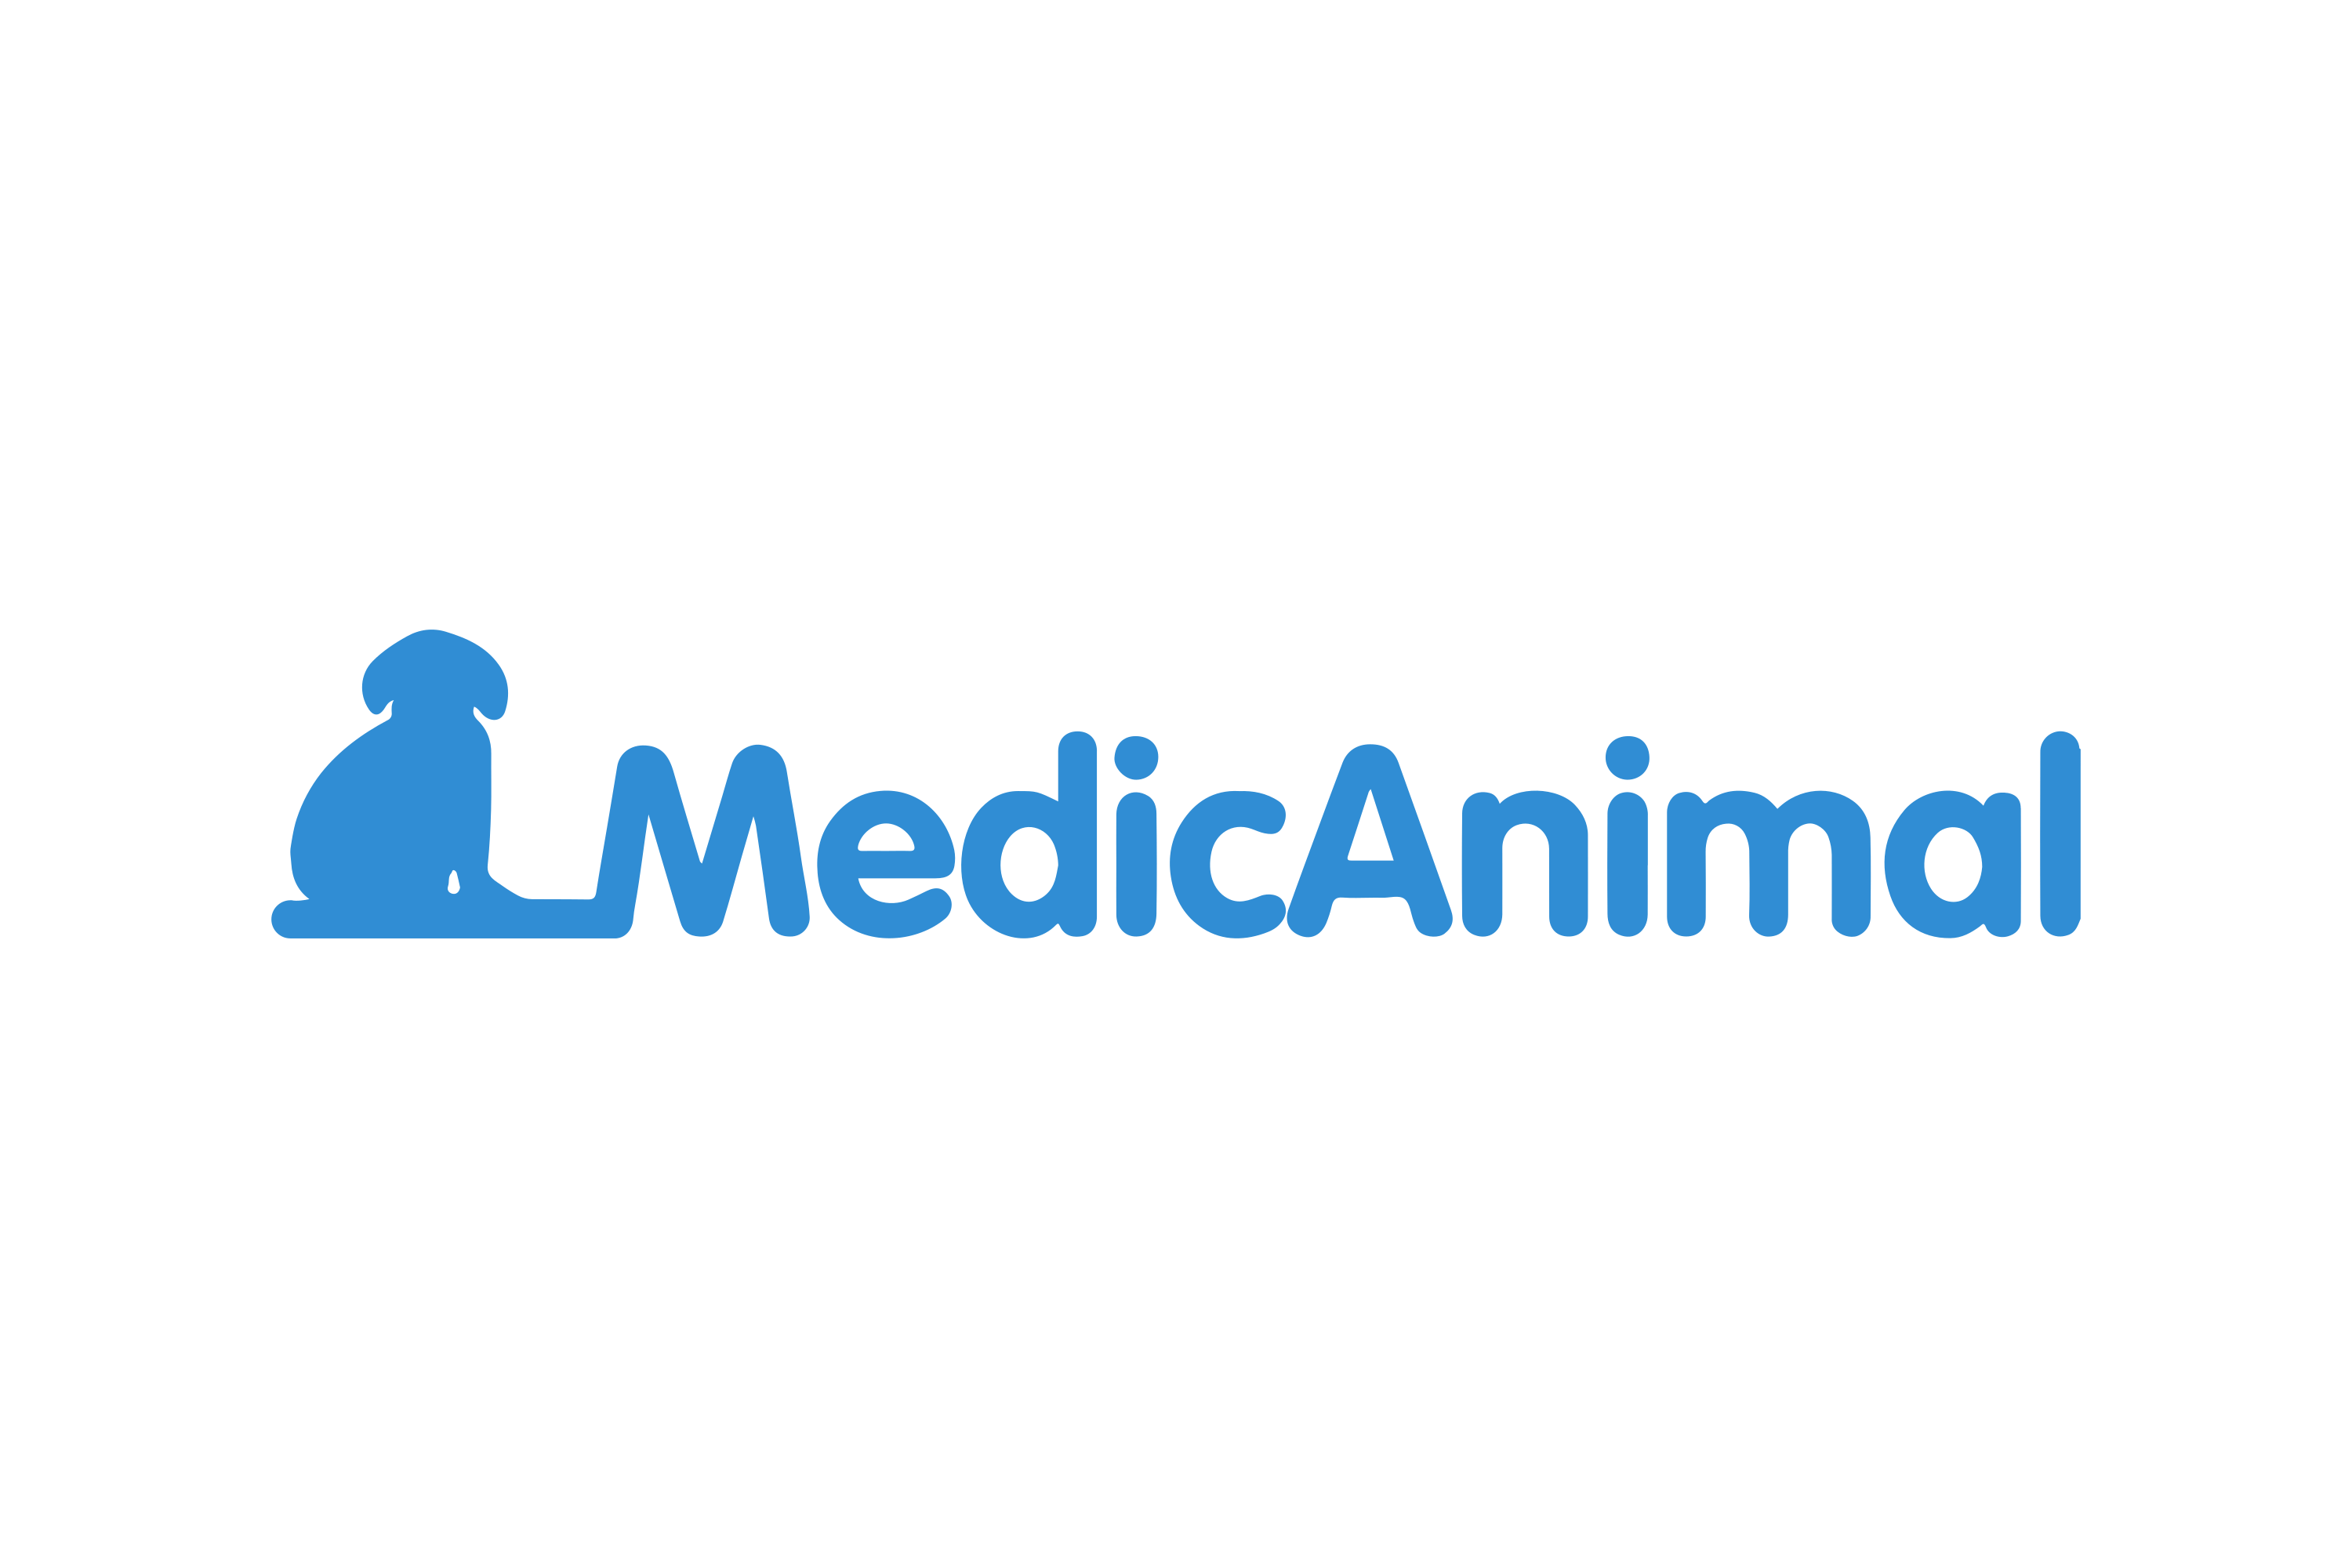 MedicAnimal Logo